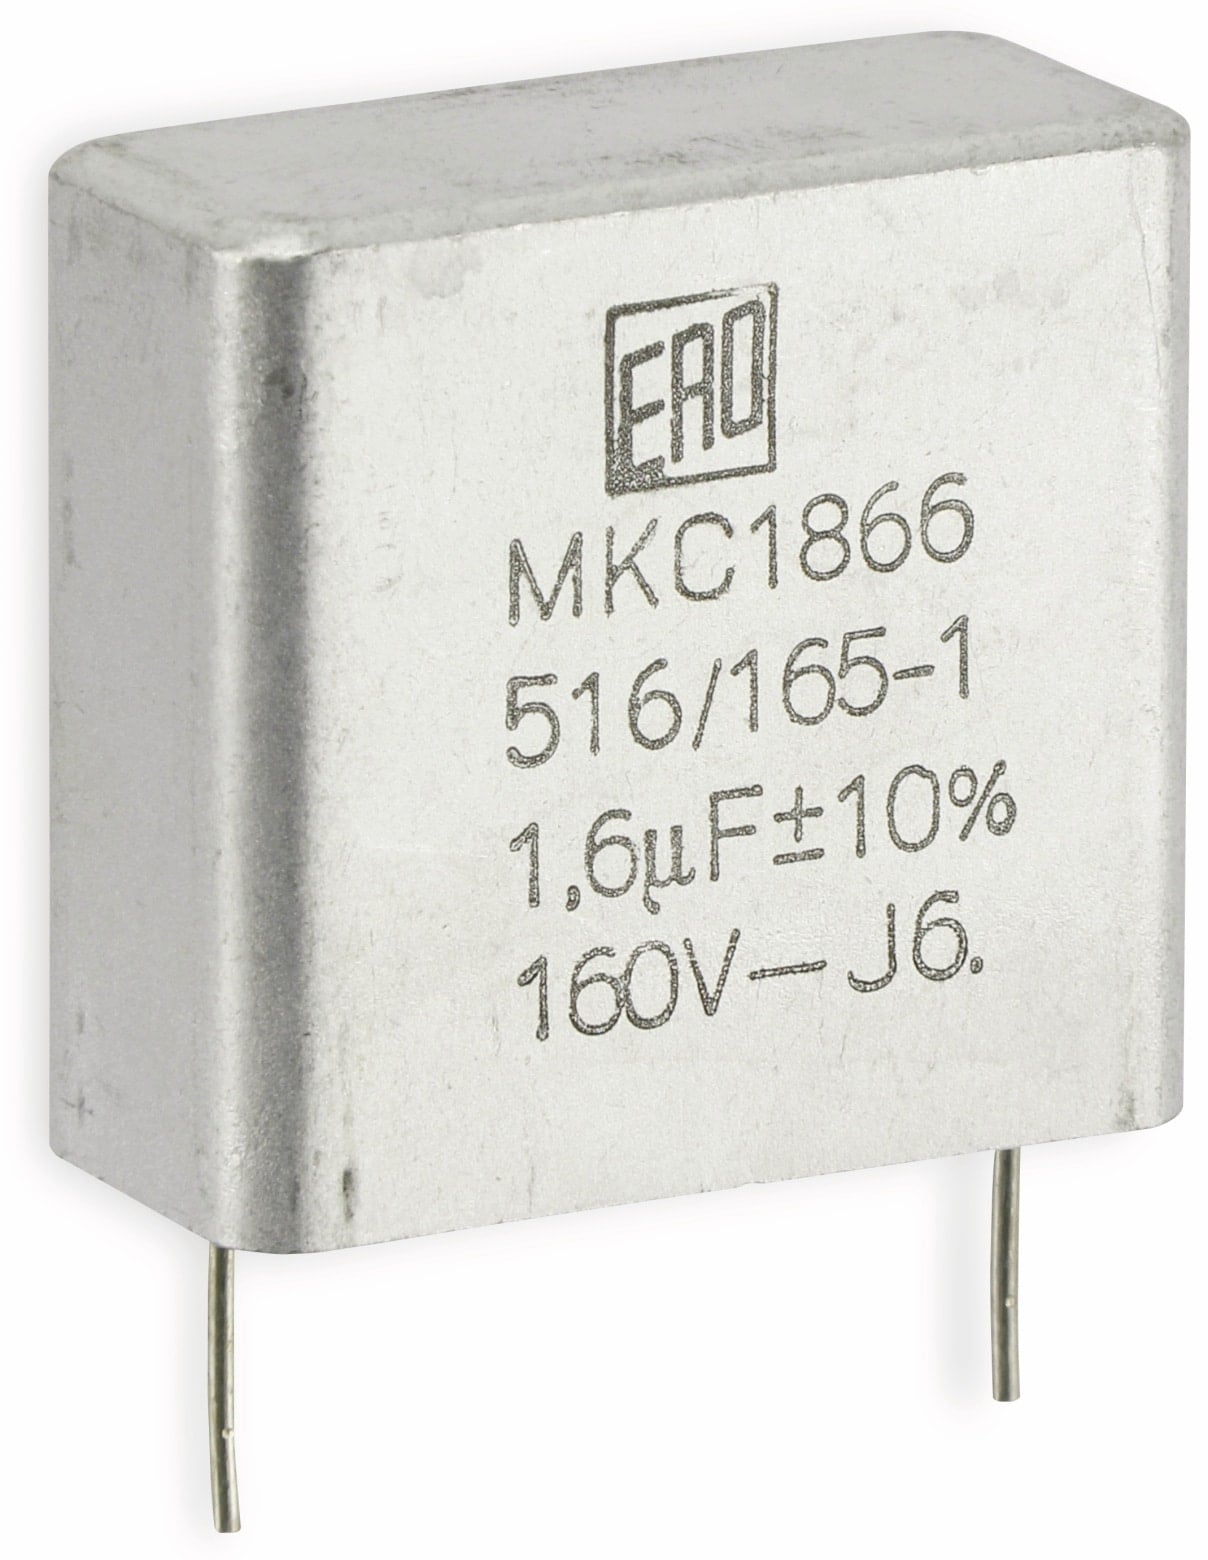 Folienkondensator ERO MKC1866, 1,6 µF, 160 V-